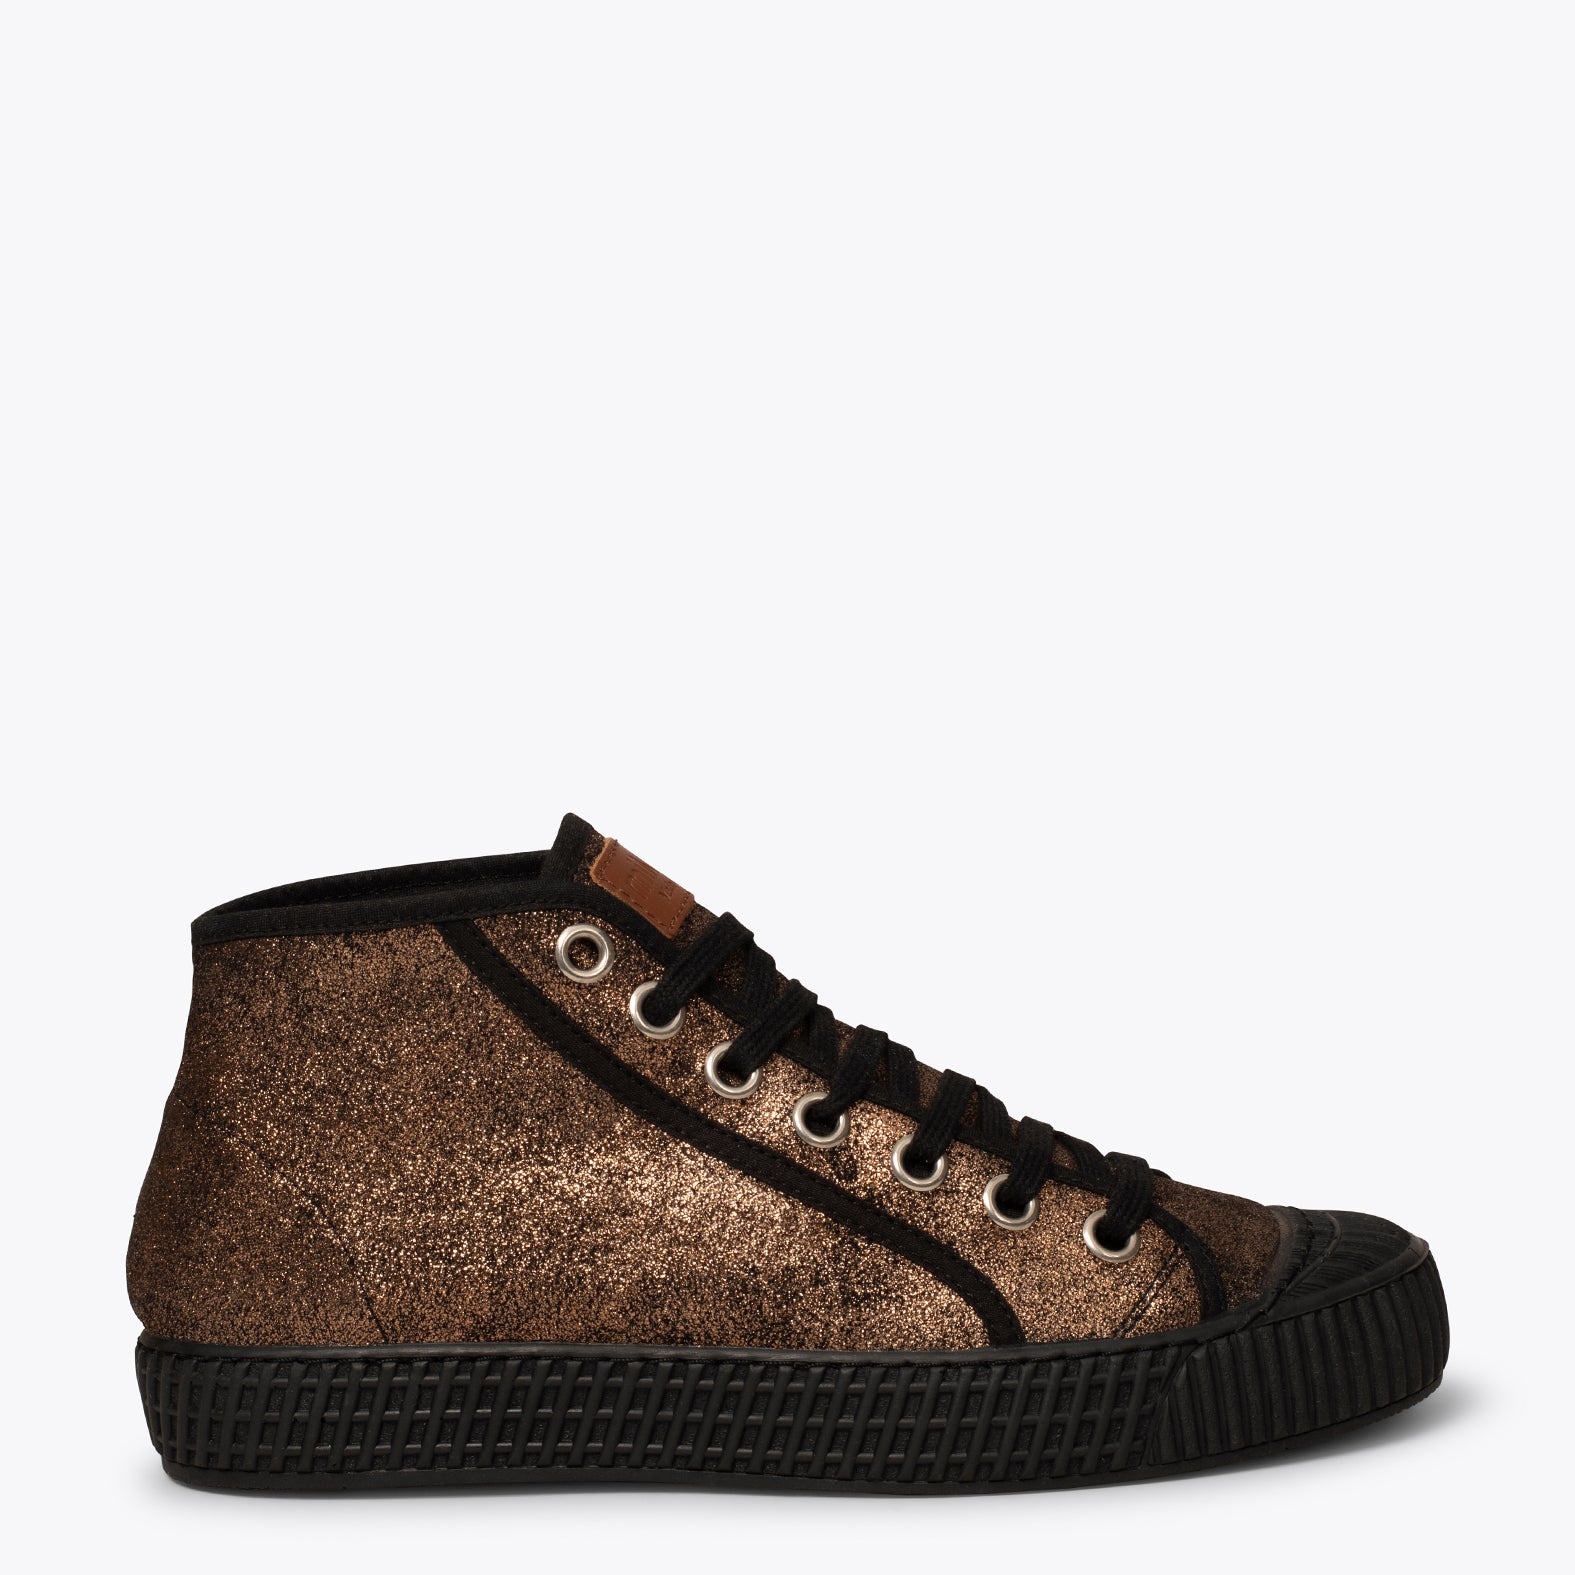 JUMP – COPPER metallic nappa leather sneakers